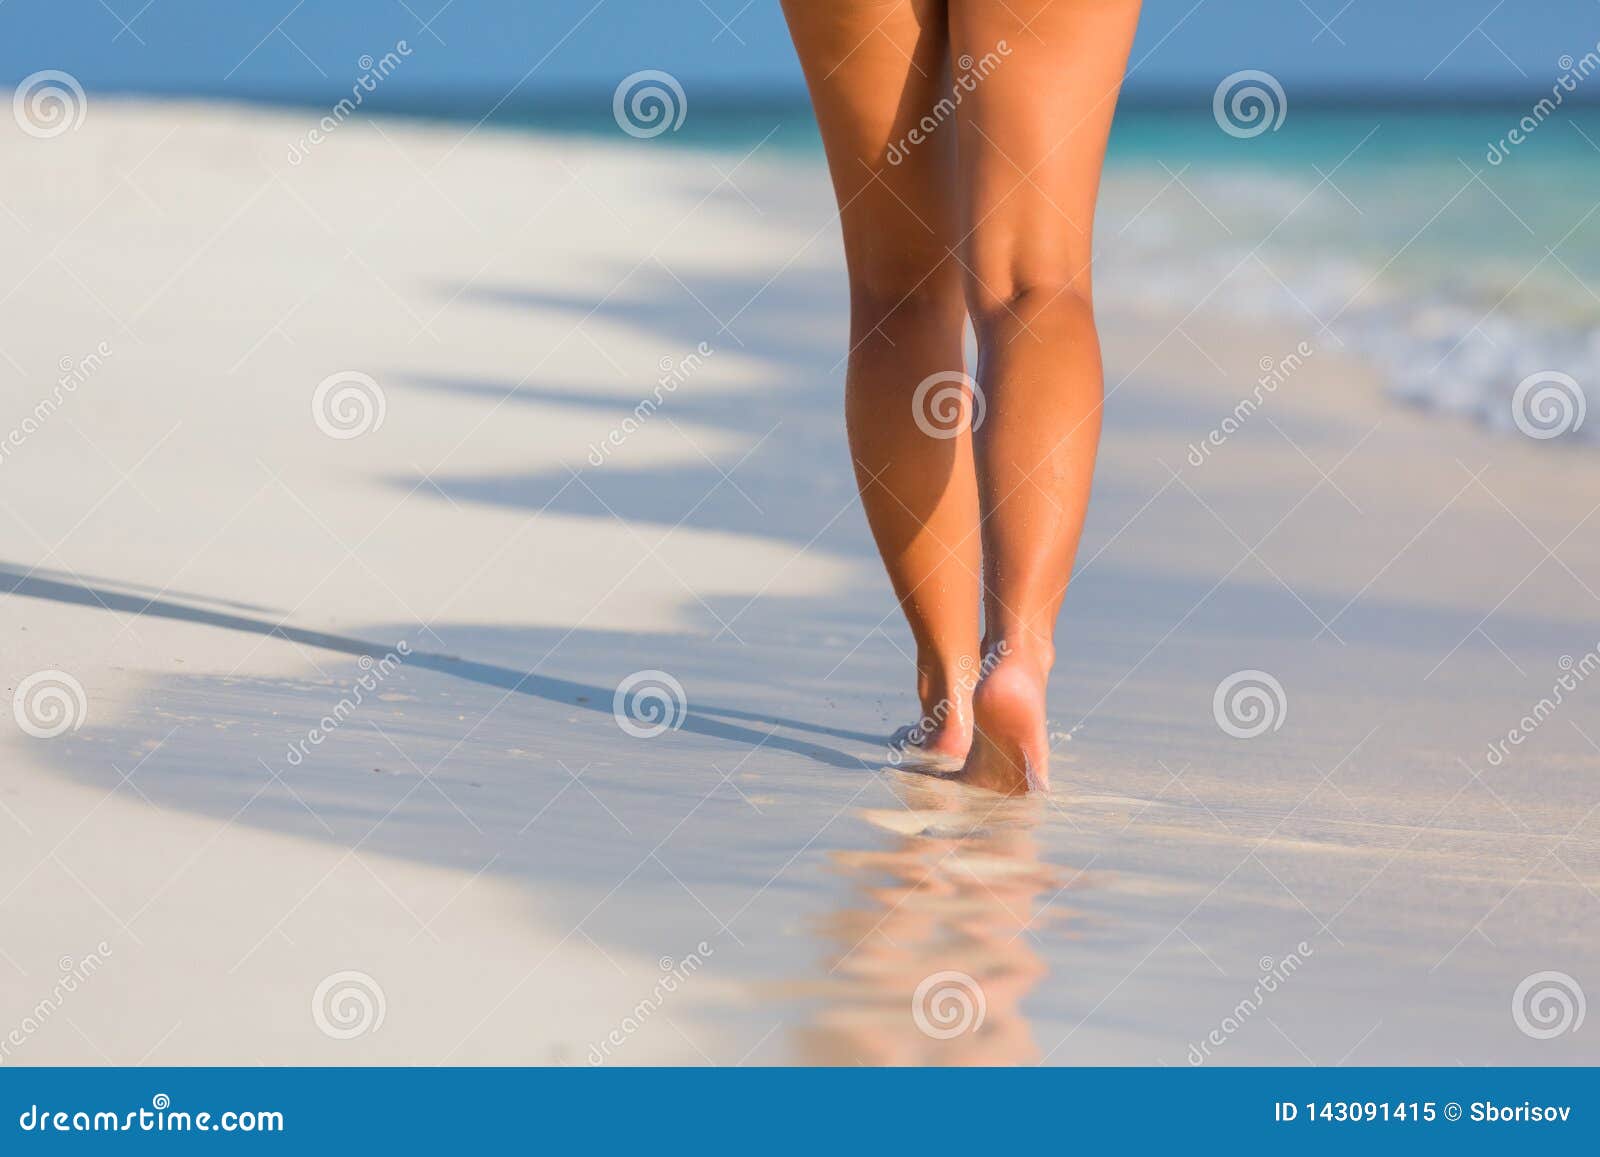 Nude Beach Amateur Handjob Free Pics